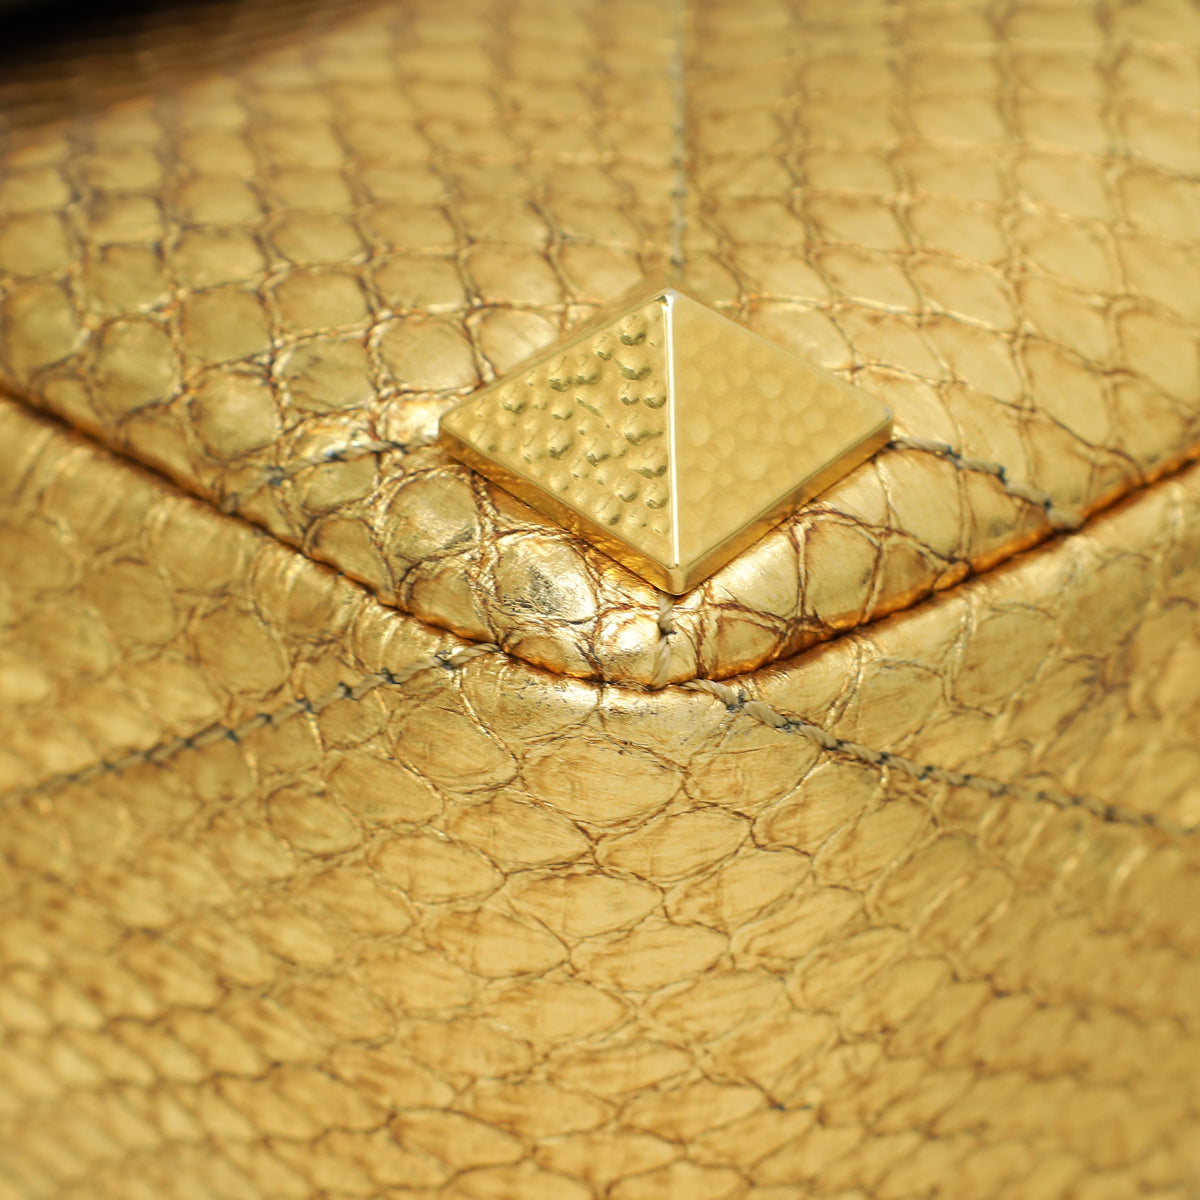 Valentino Metallic Gold Roman Stud The Shoulder Bag Large